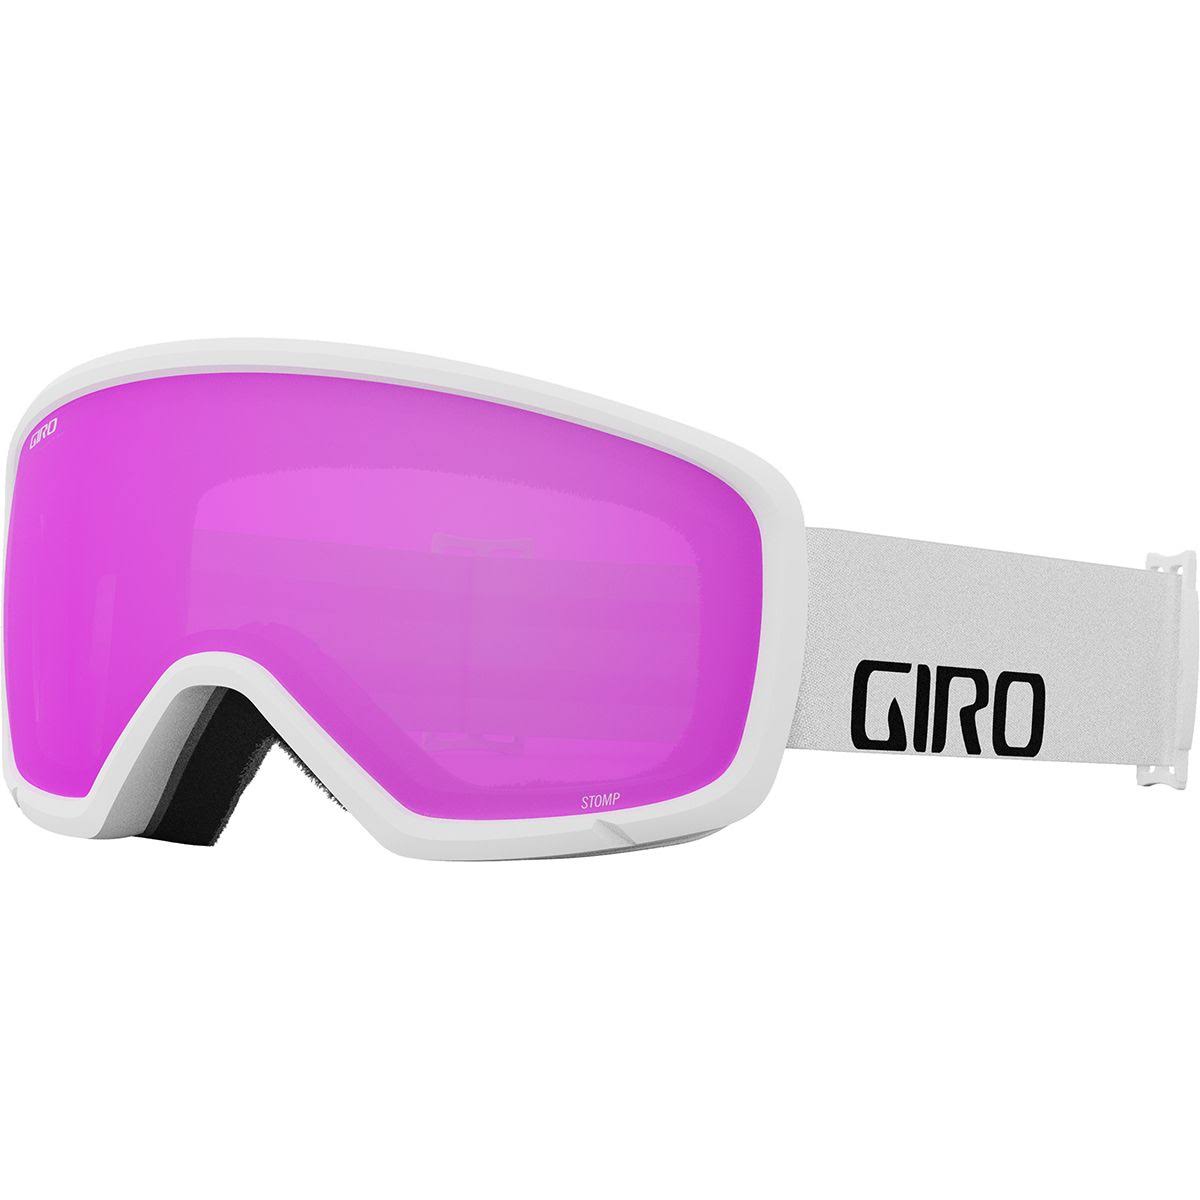 Giro Kids Stomp Ski Goggles (Size One Size, White)